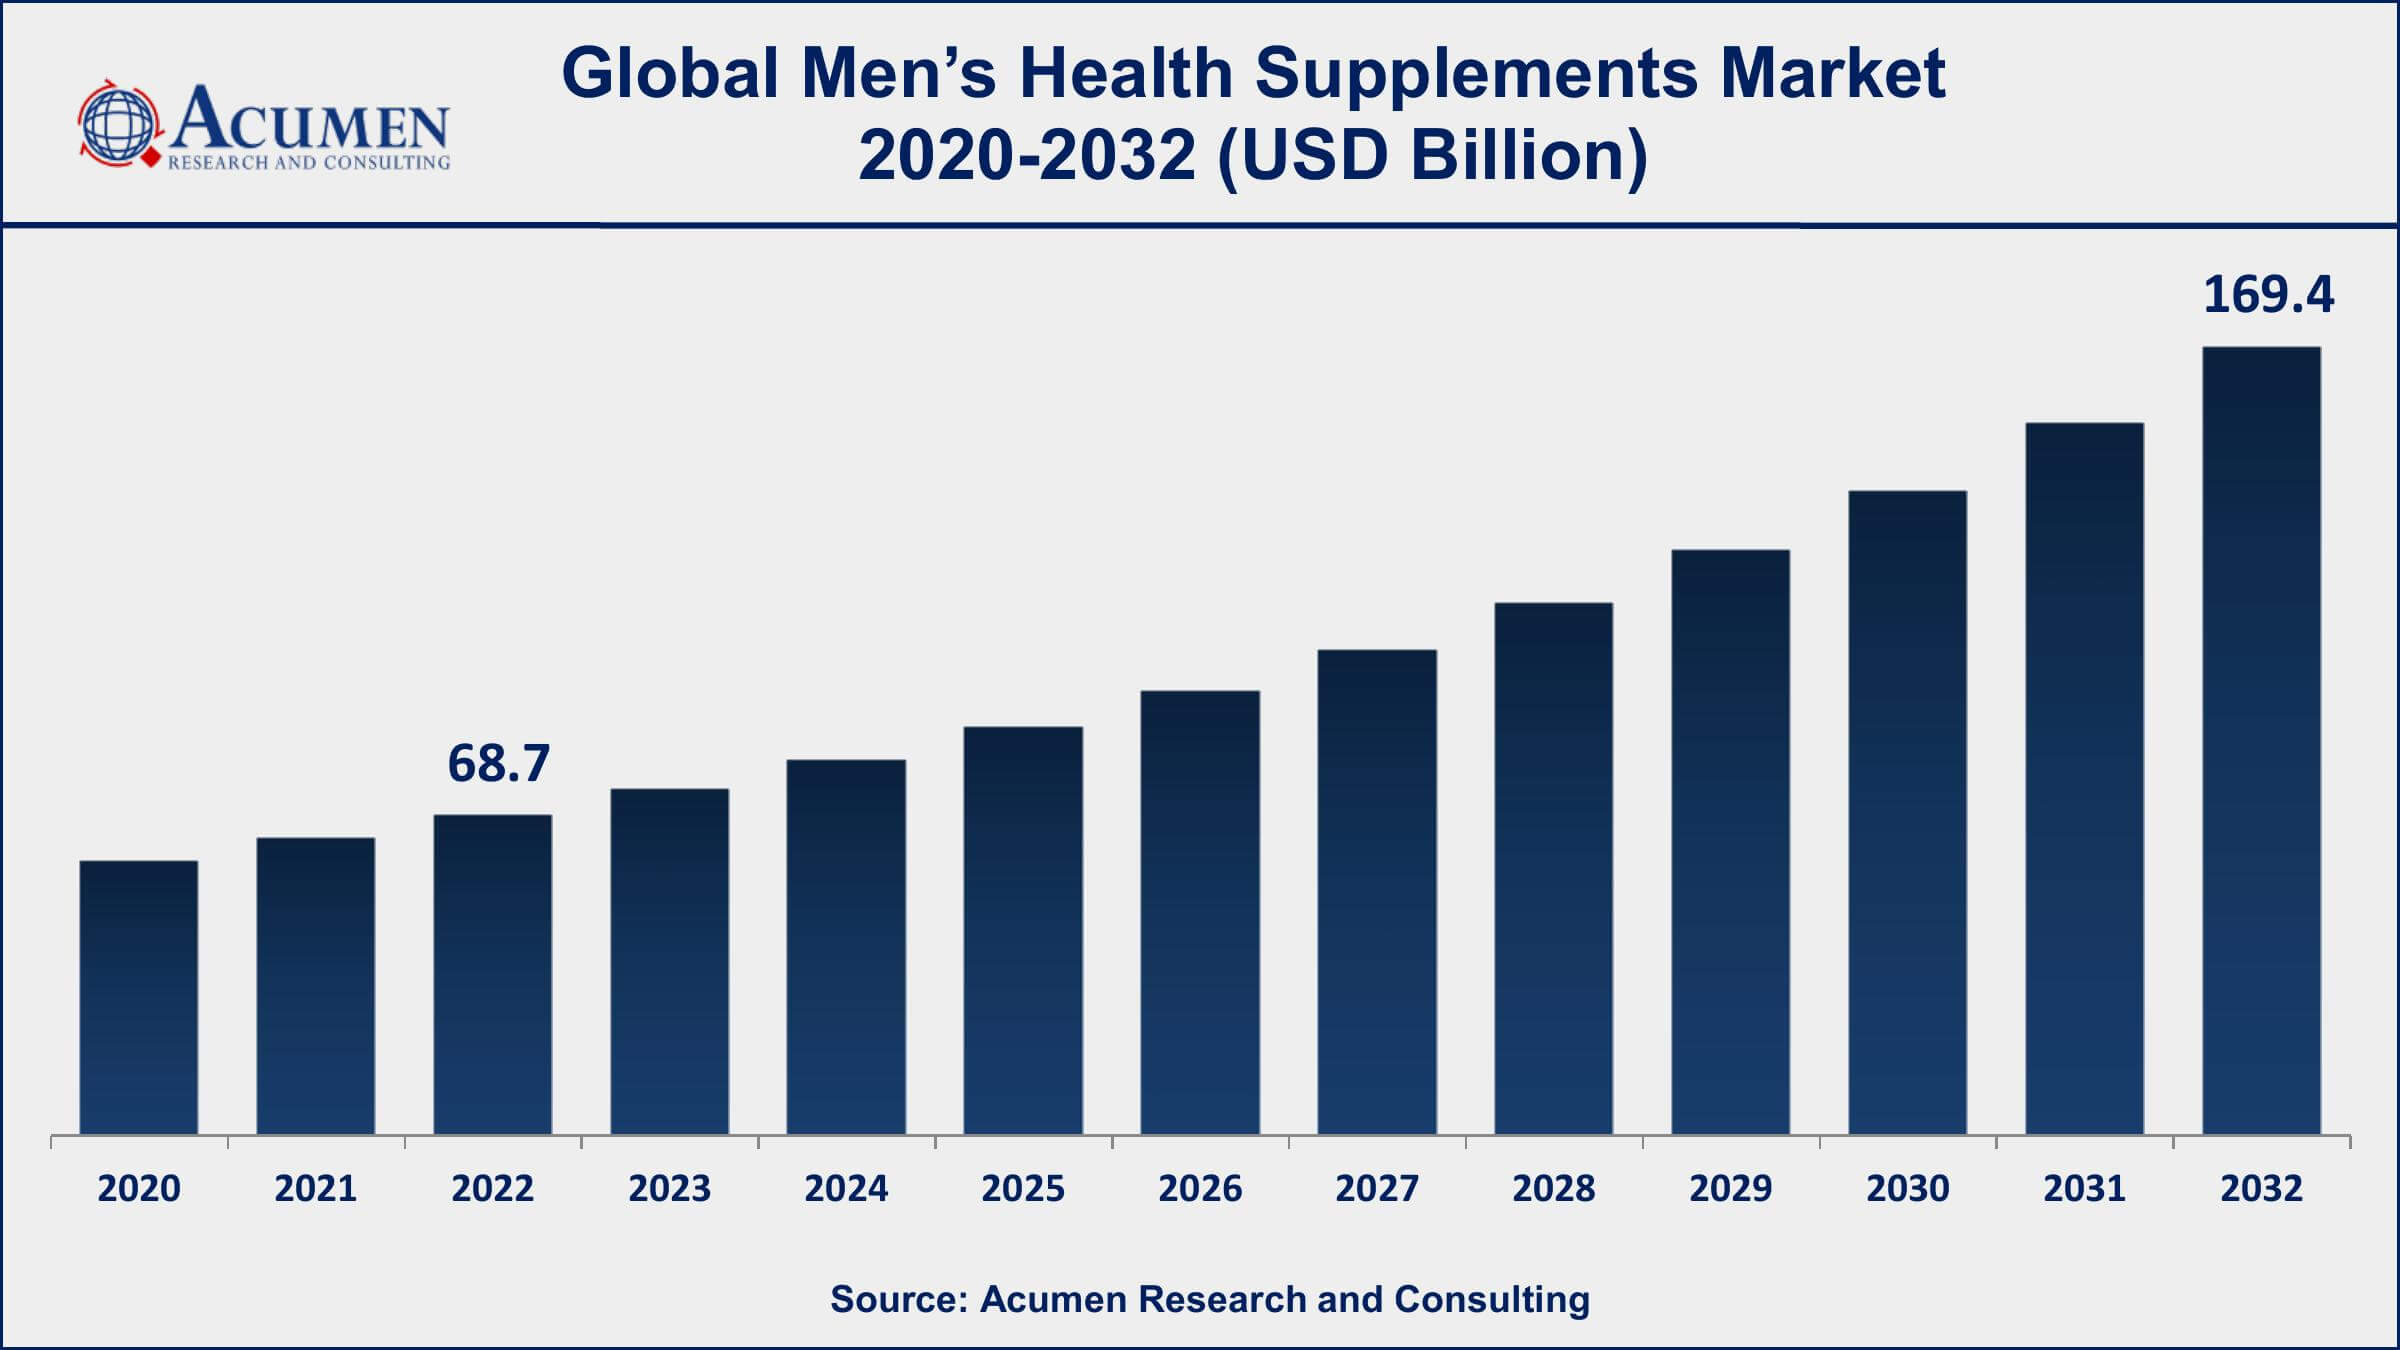 Men’s Health Supplements Market Dynamics